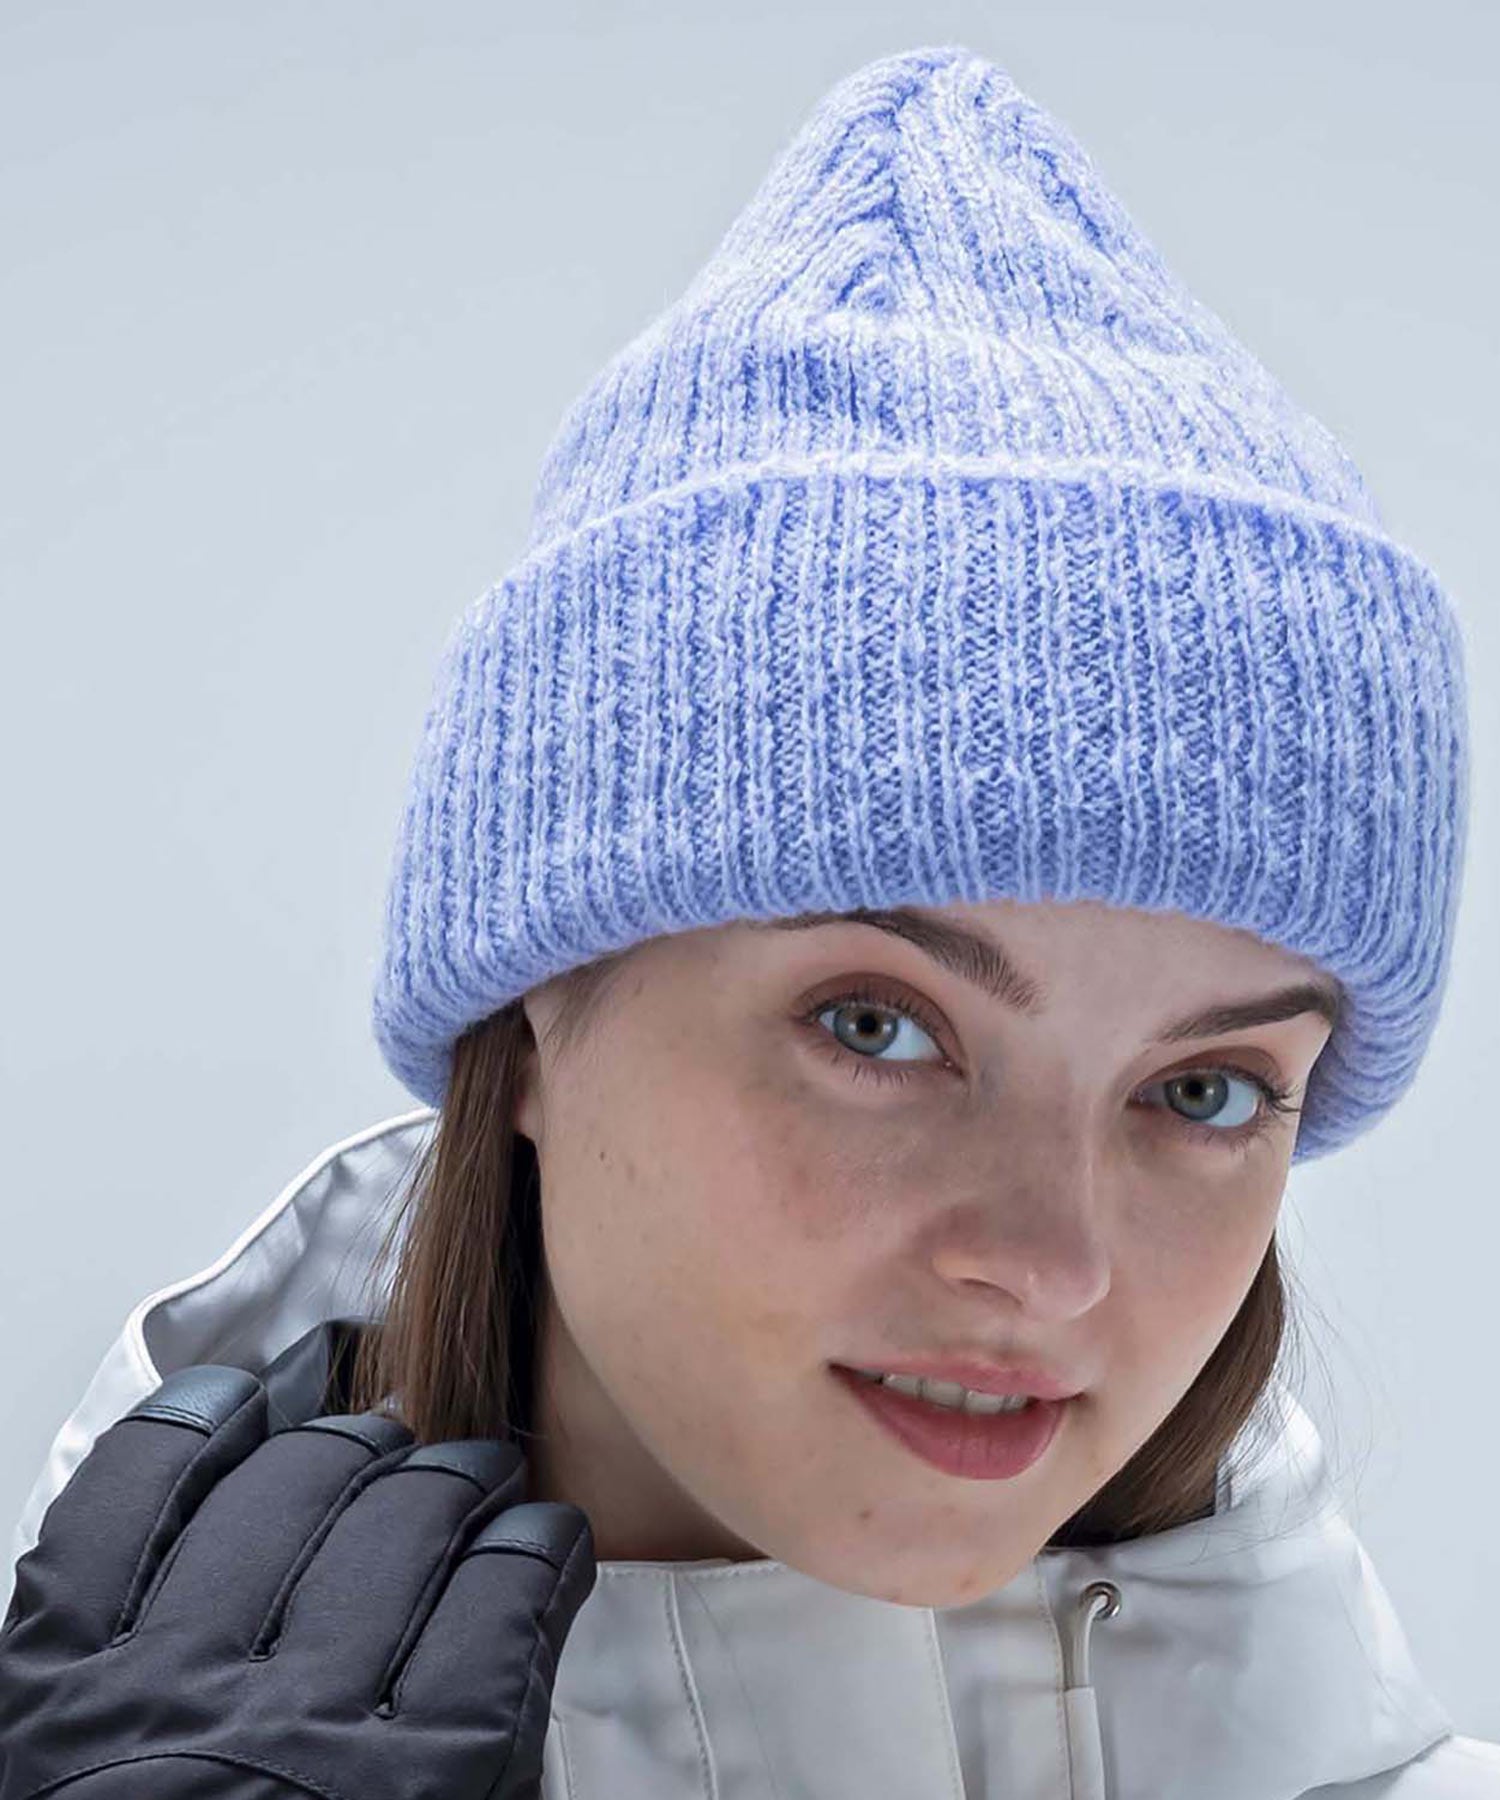 【WOMENS】スキーウェア ニットキャップ Super Space-Time Knit Hat / ACC /phenixスキーウェア23AW新作